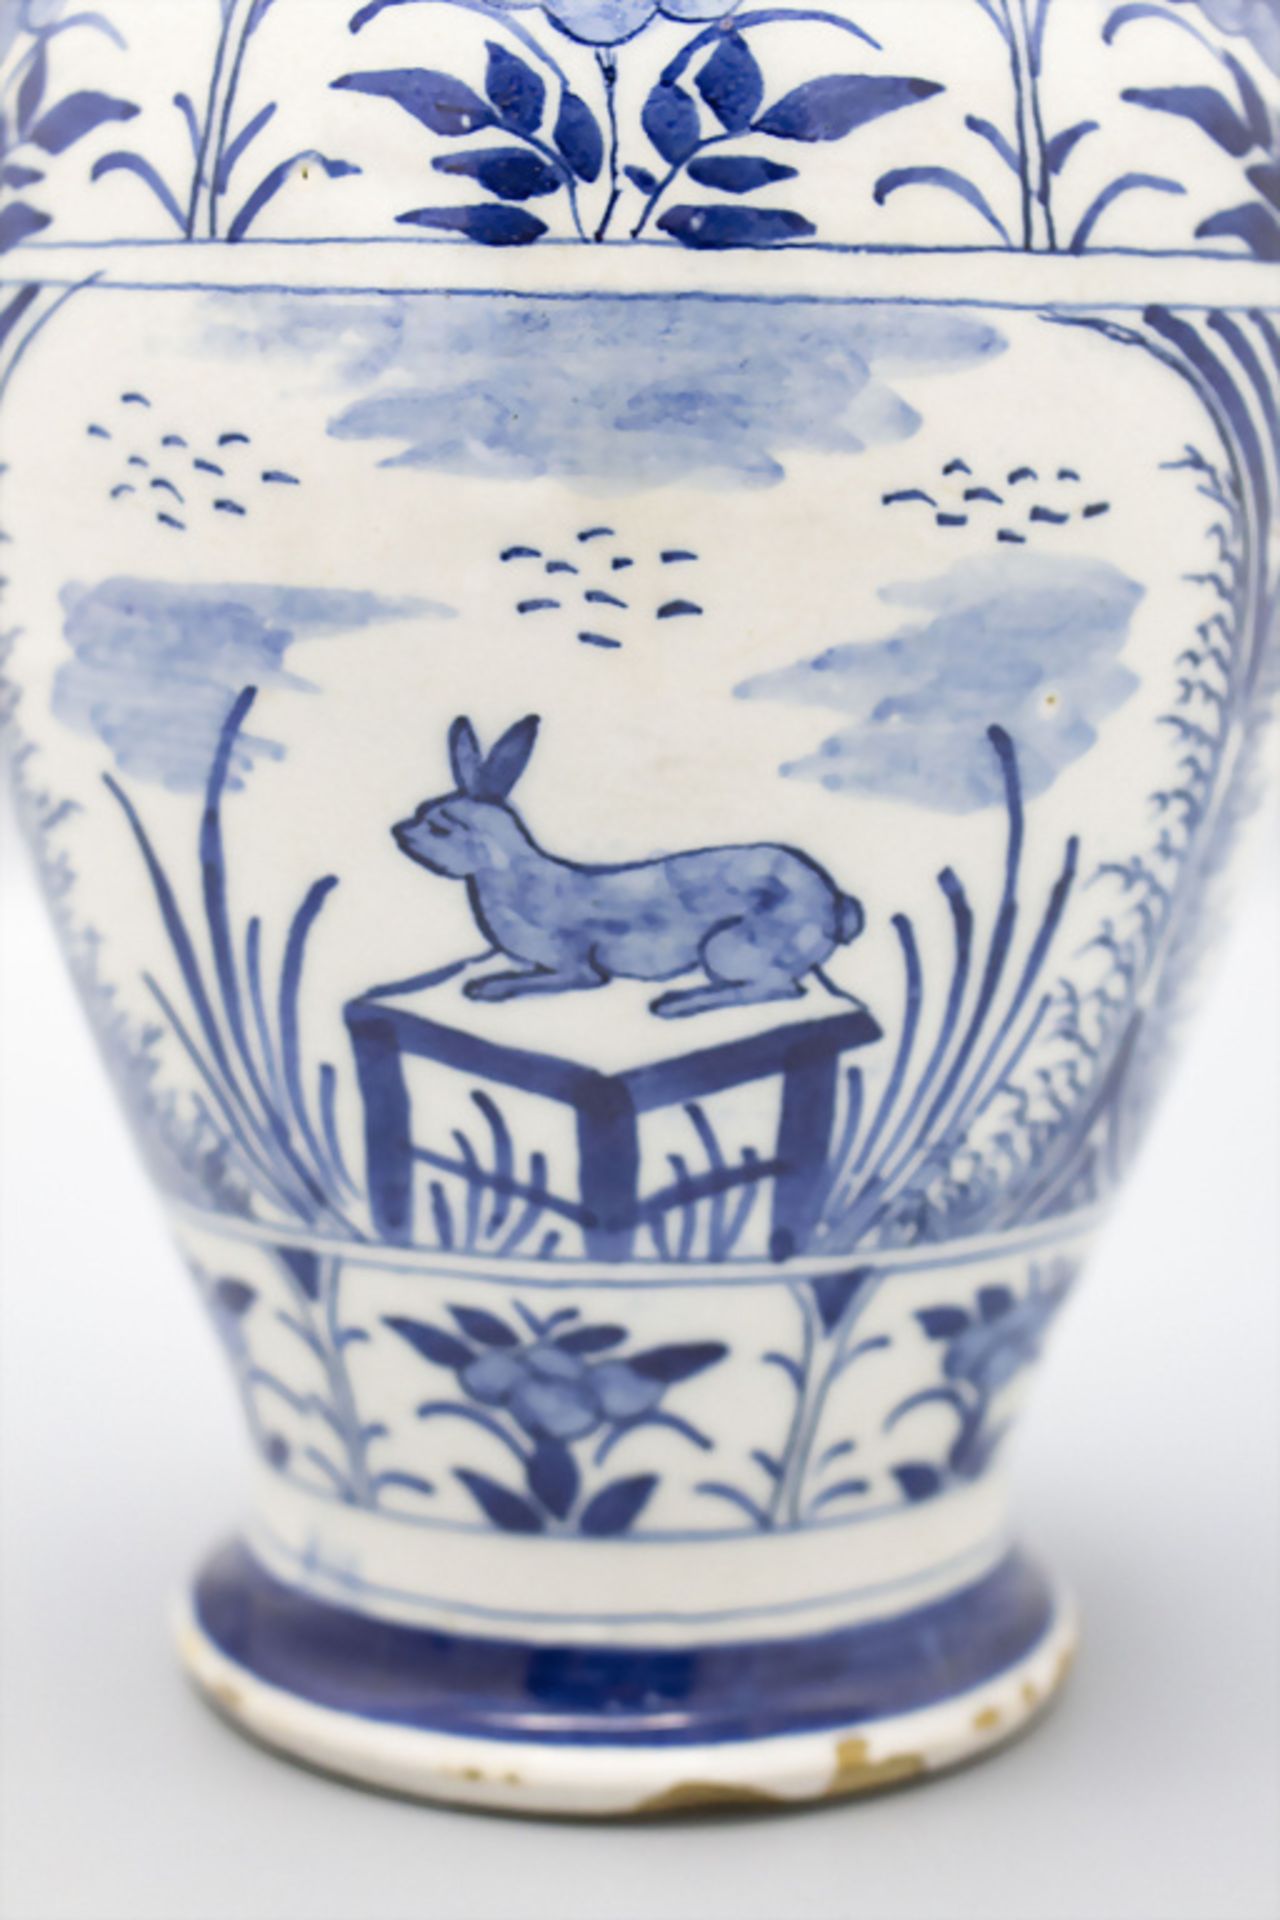 Fayence Vase mit Hasen Dekor / A fayence vase with rabbit decor, 18./19. Jh - Image 3 of 5